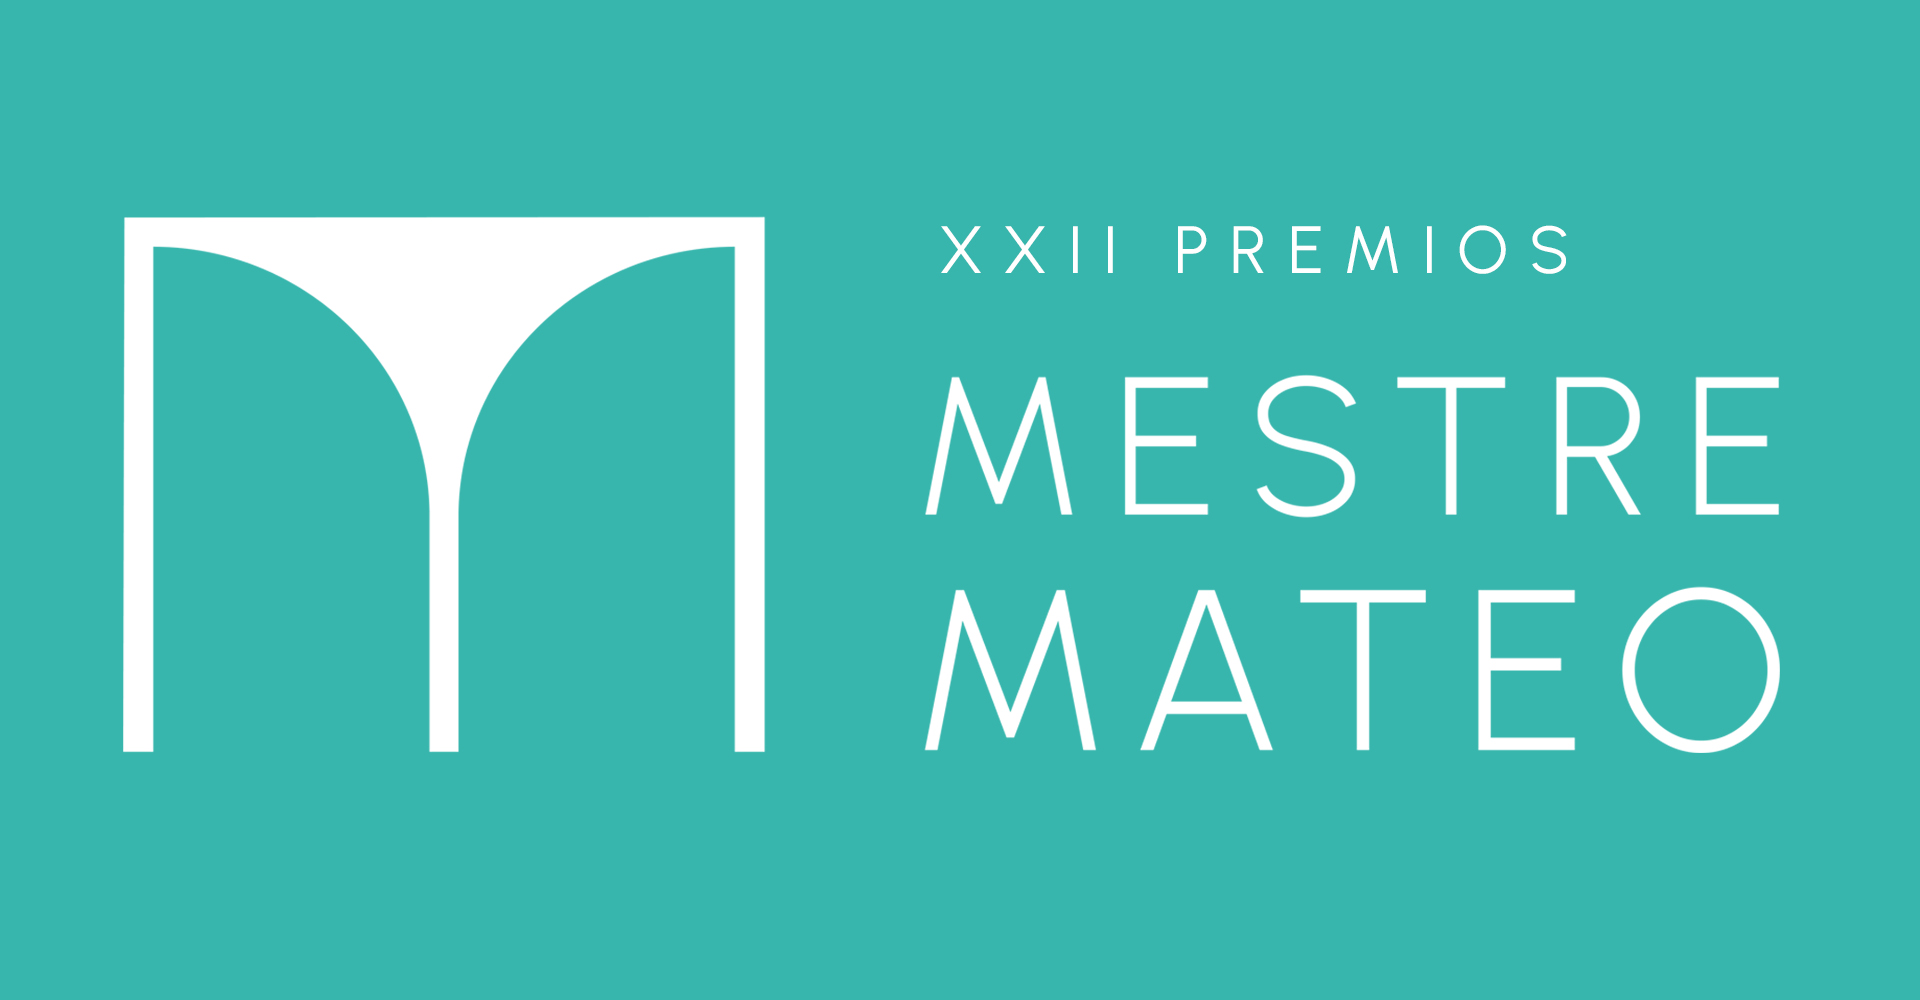 XXII Premios Mestre Mateo